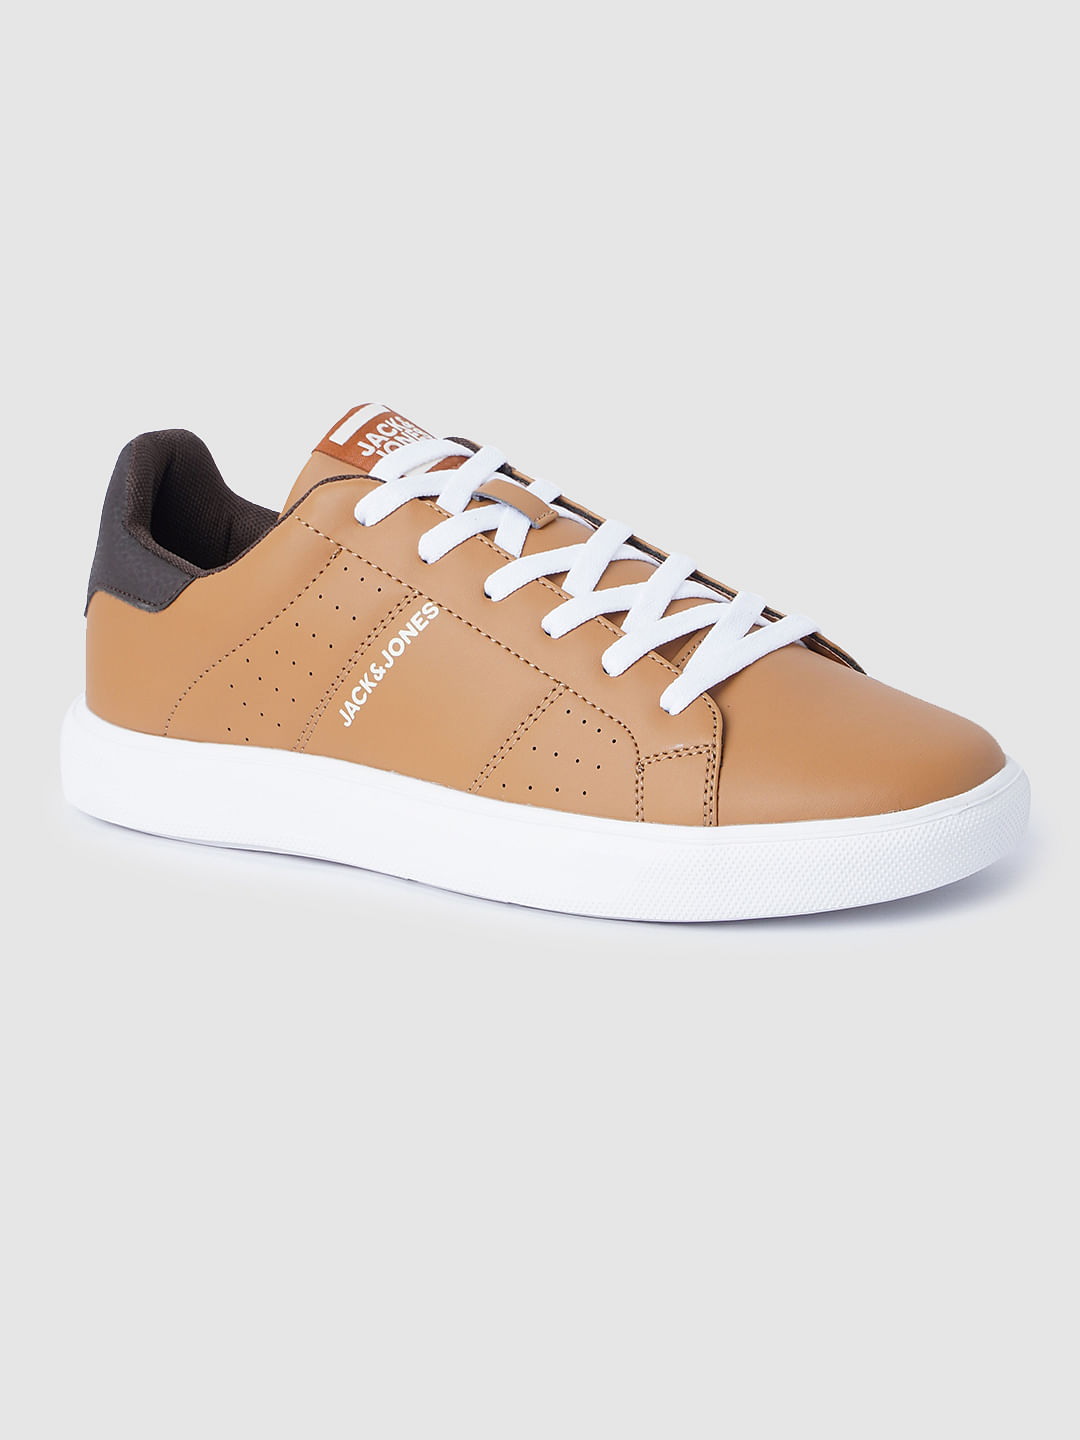 Men's Tan Color Leather Slip-on Shoes